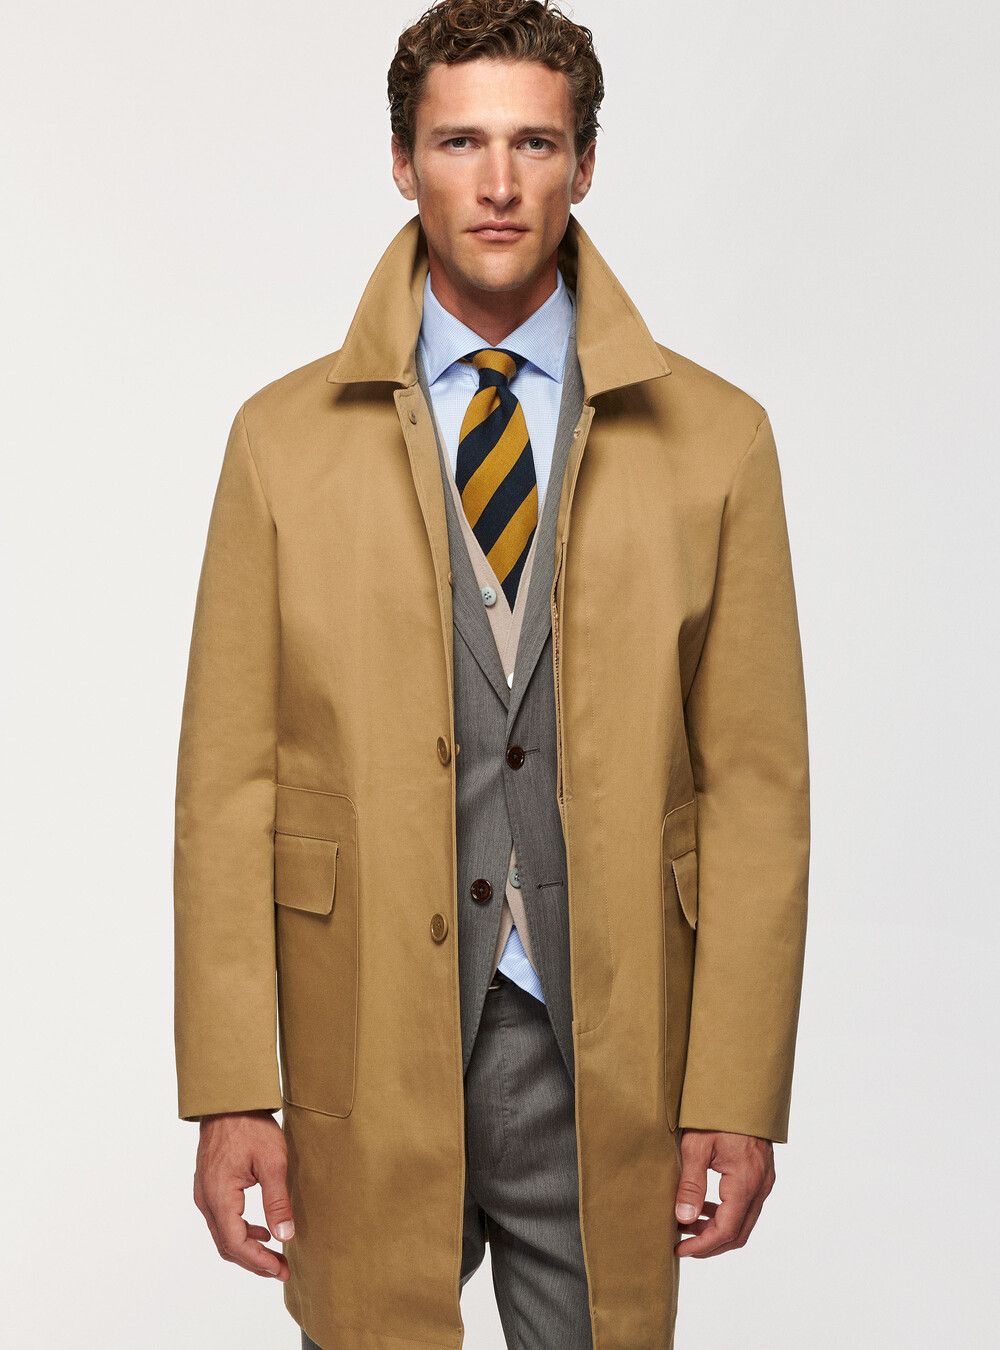 Cotton coat with large pockets | GutteridgeEU | Men's catalog ...